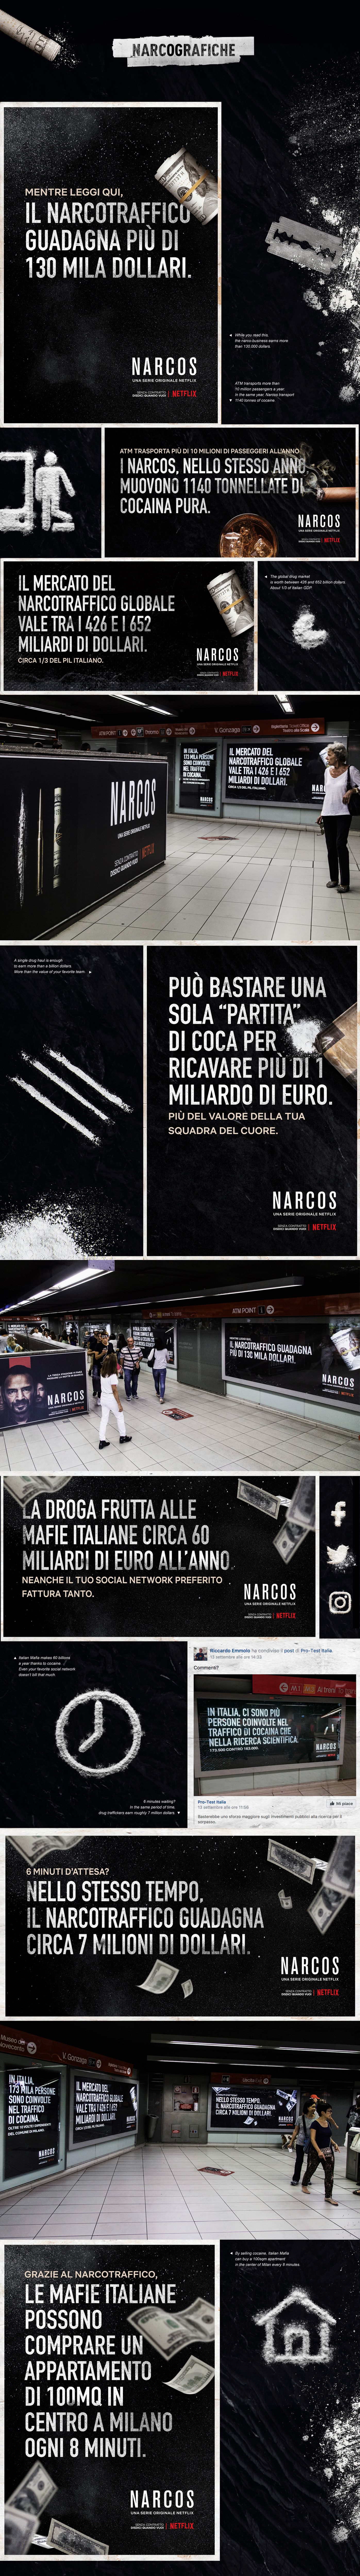 narcos Netflix roberto saviano billboard out of home drug Cali coca ecobar copyad